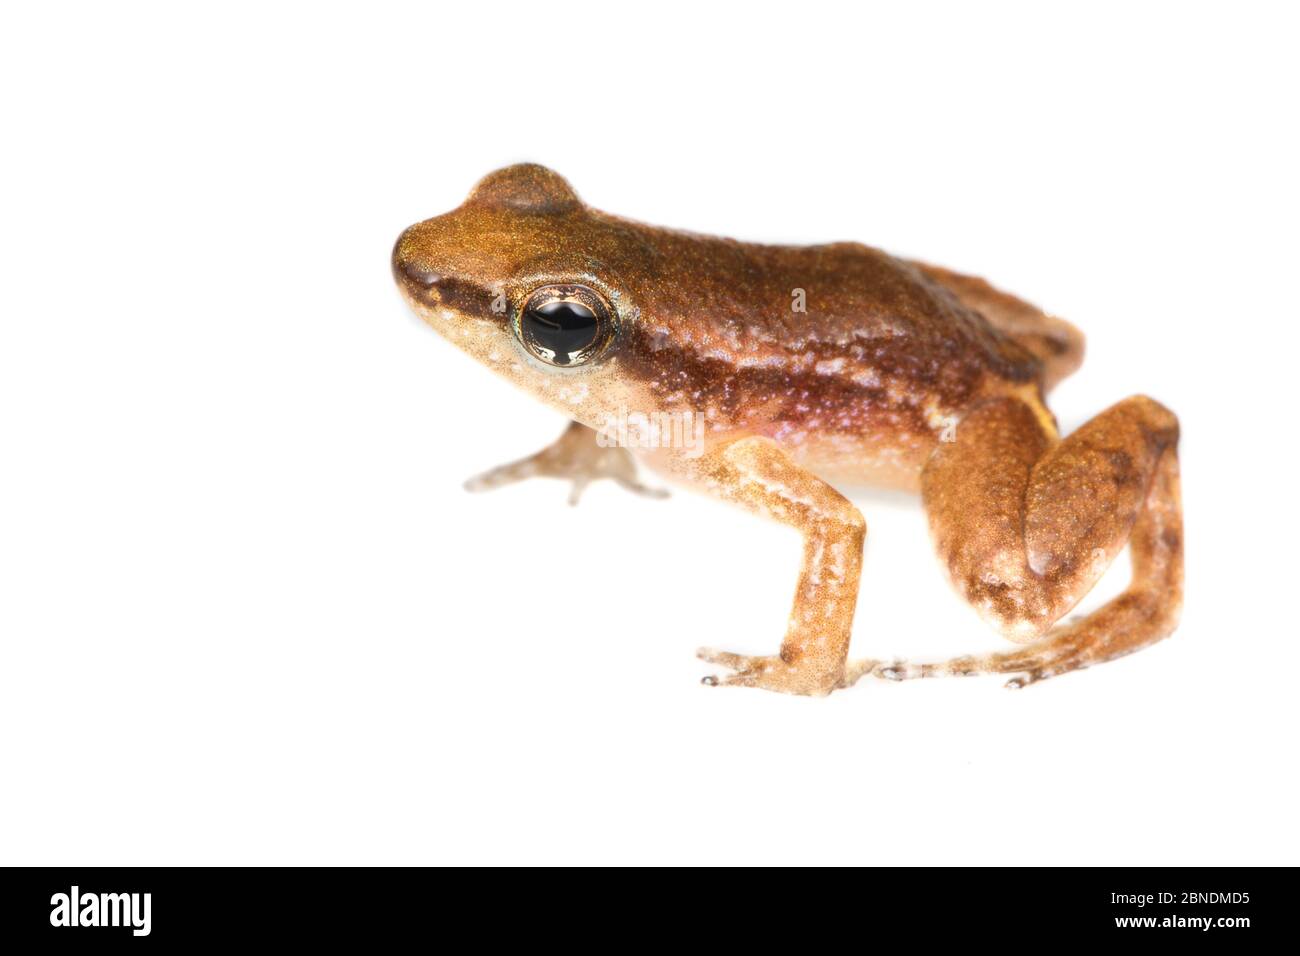 Frog (Anomaloglossus baeobatrachus) Grand Matoury, French Guiana  Meetyourneighbours.net project Stock Photo